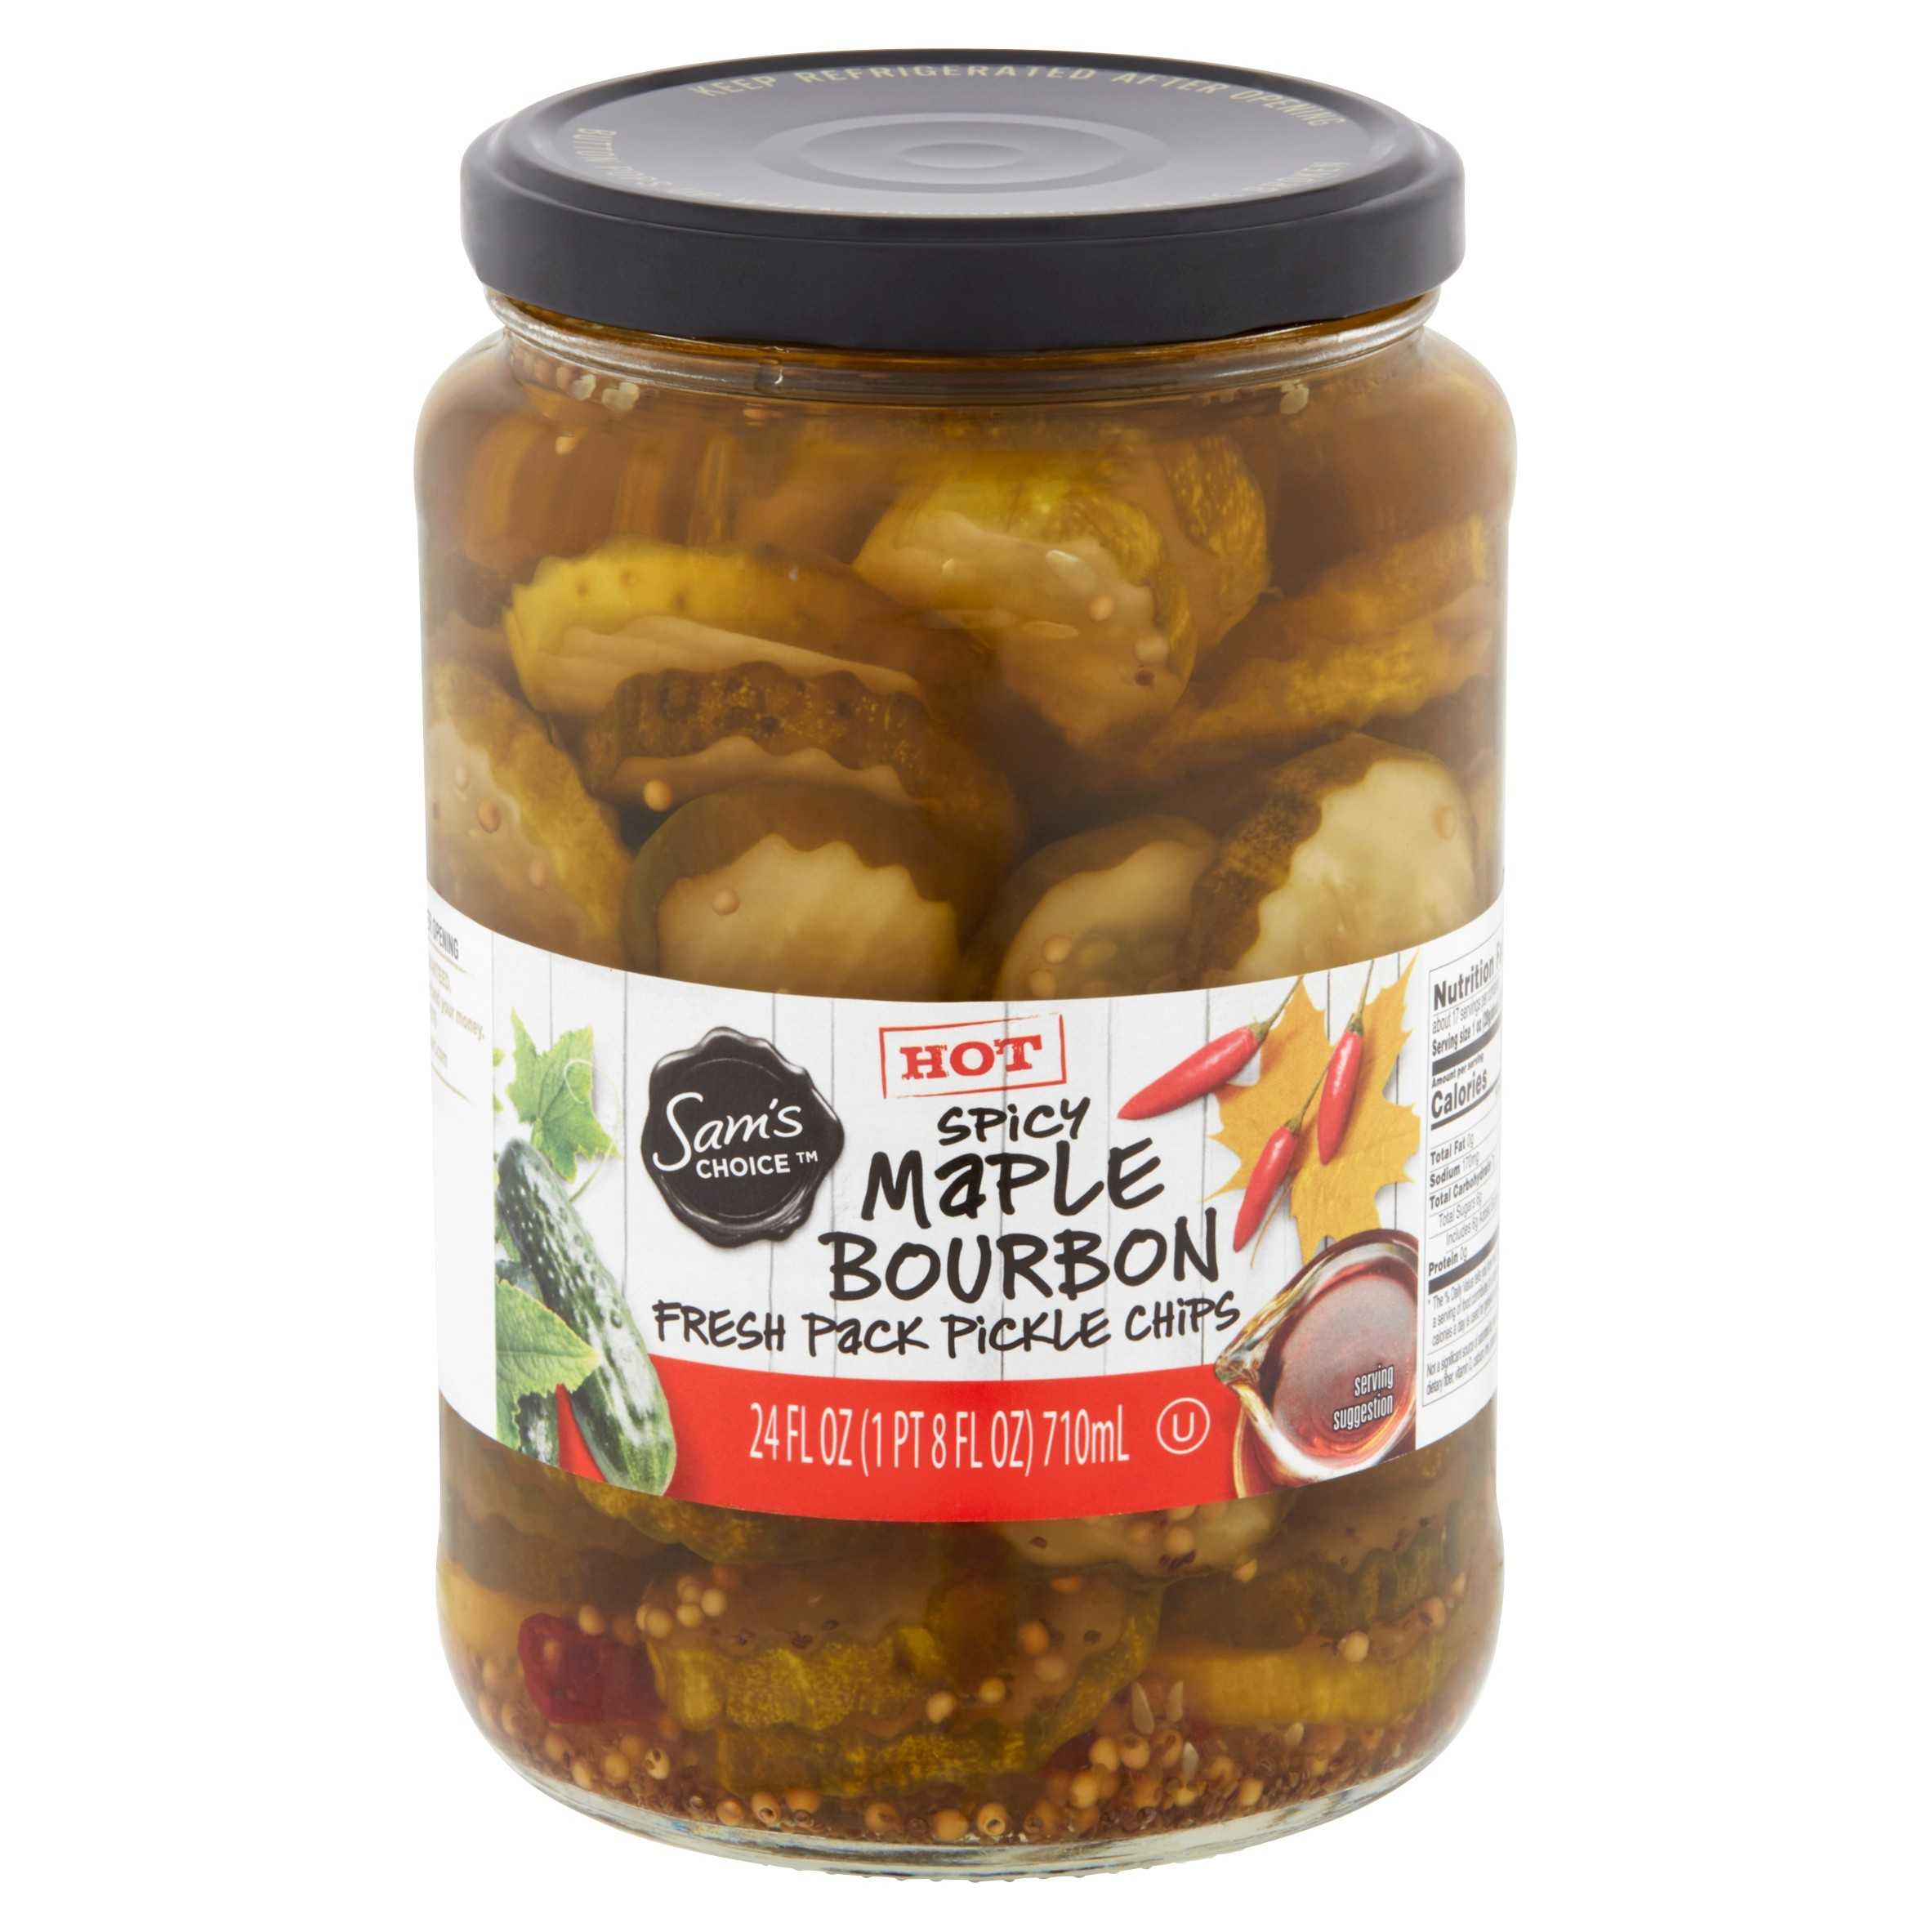 Sam's Choice Hot Spicy Maple Bourbon Fresh Pack Pickle Chips, 24 fl oz